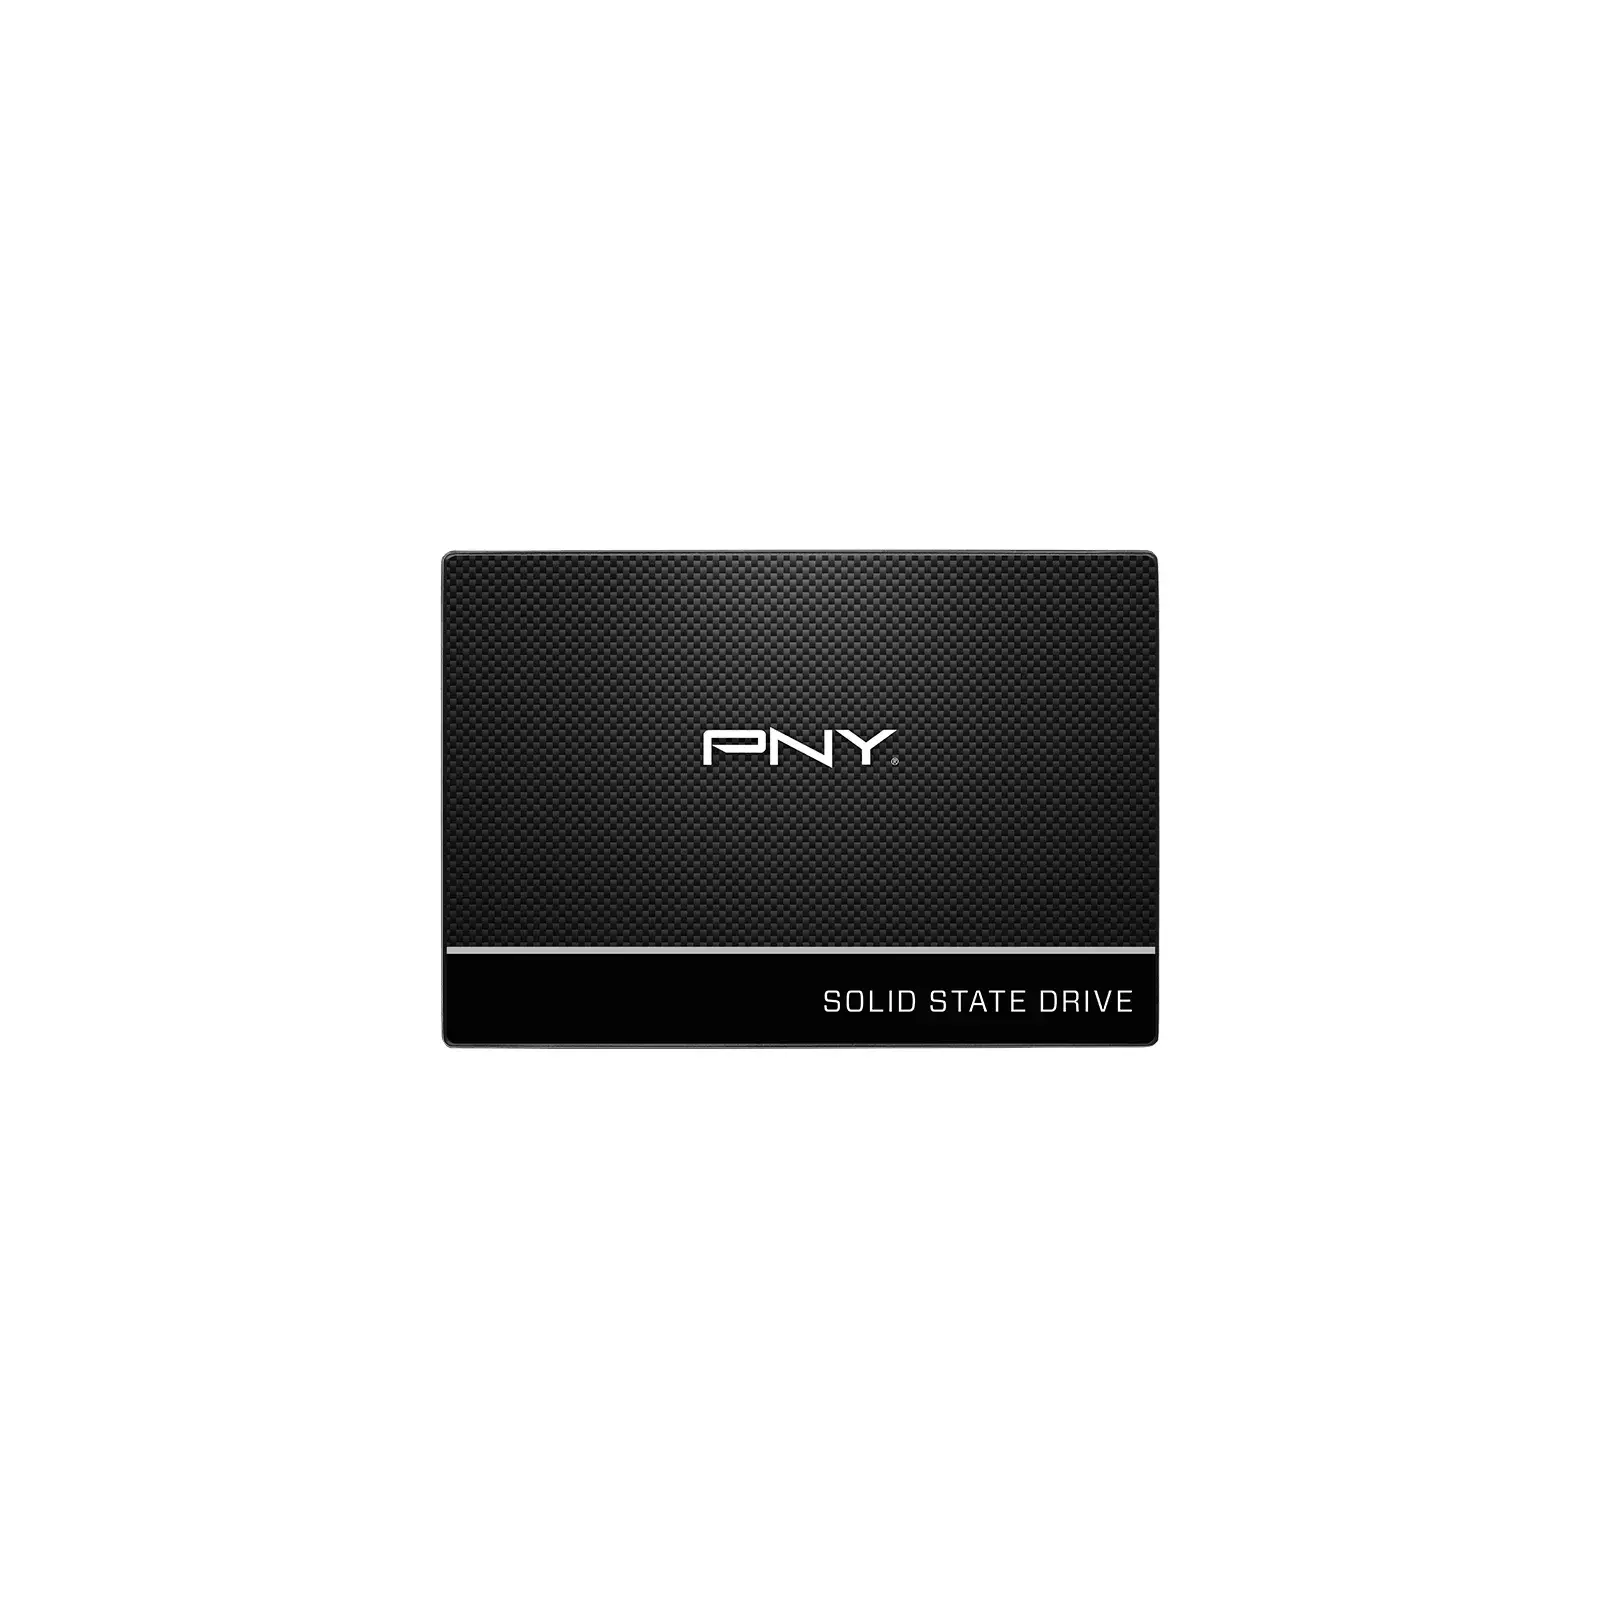 PNY SSD7CS900-4TB-RB Photo 1